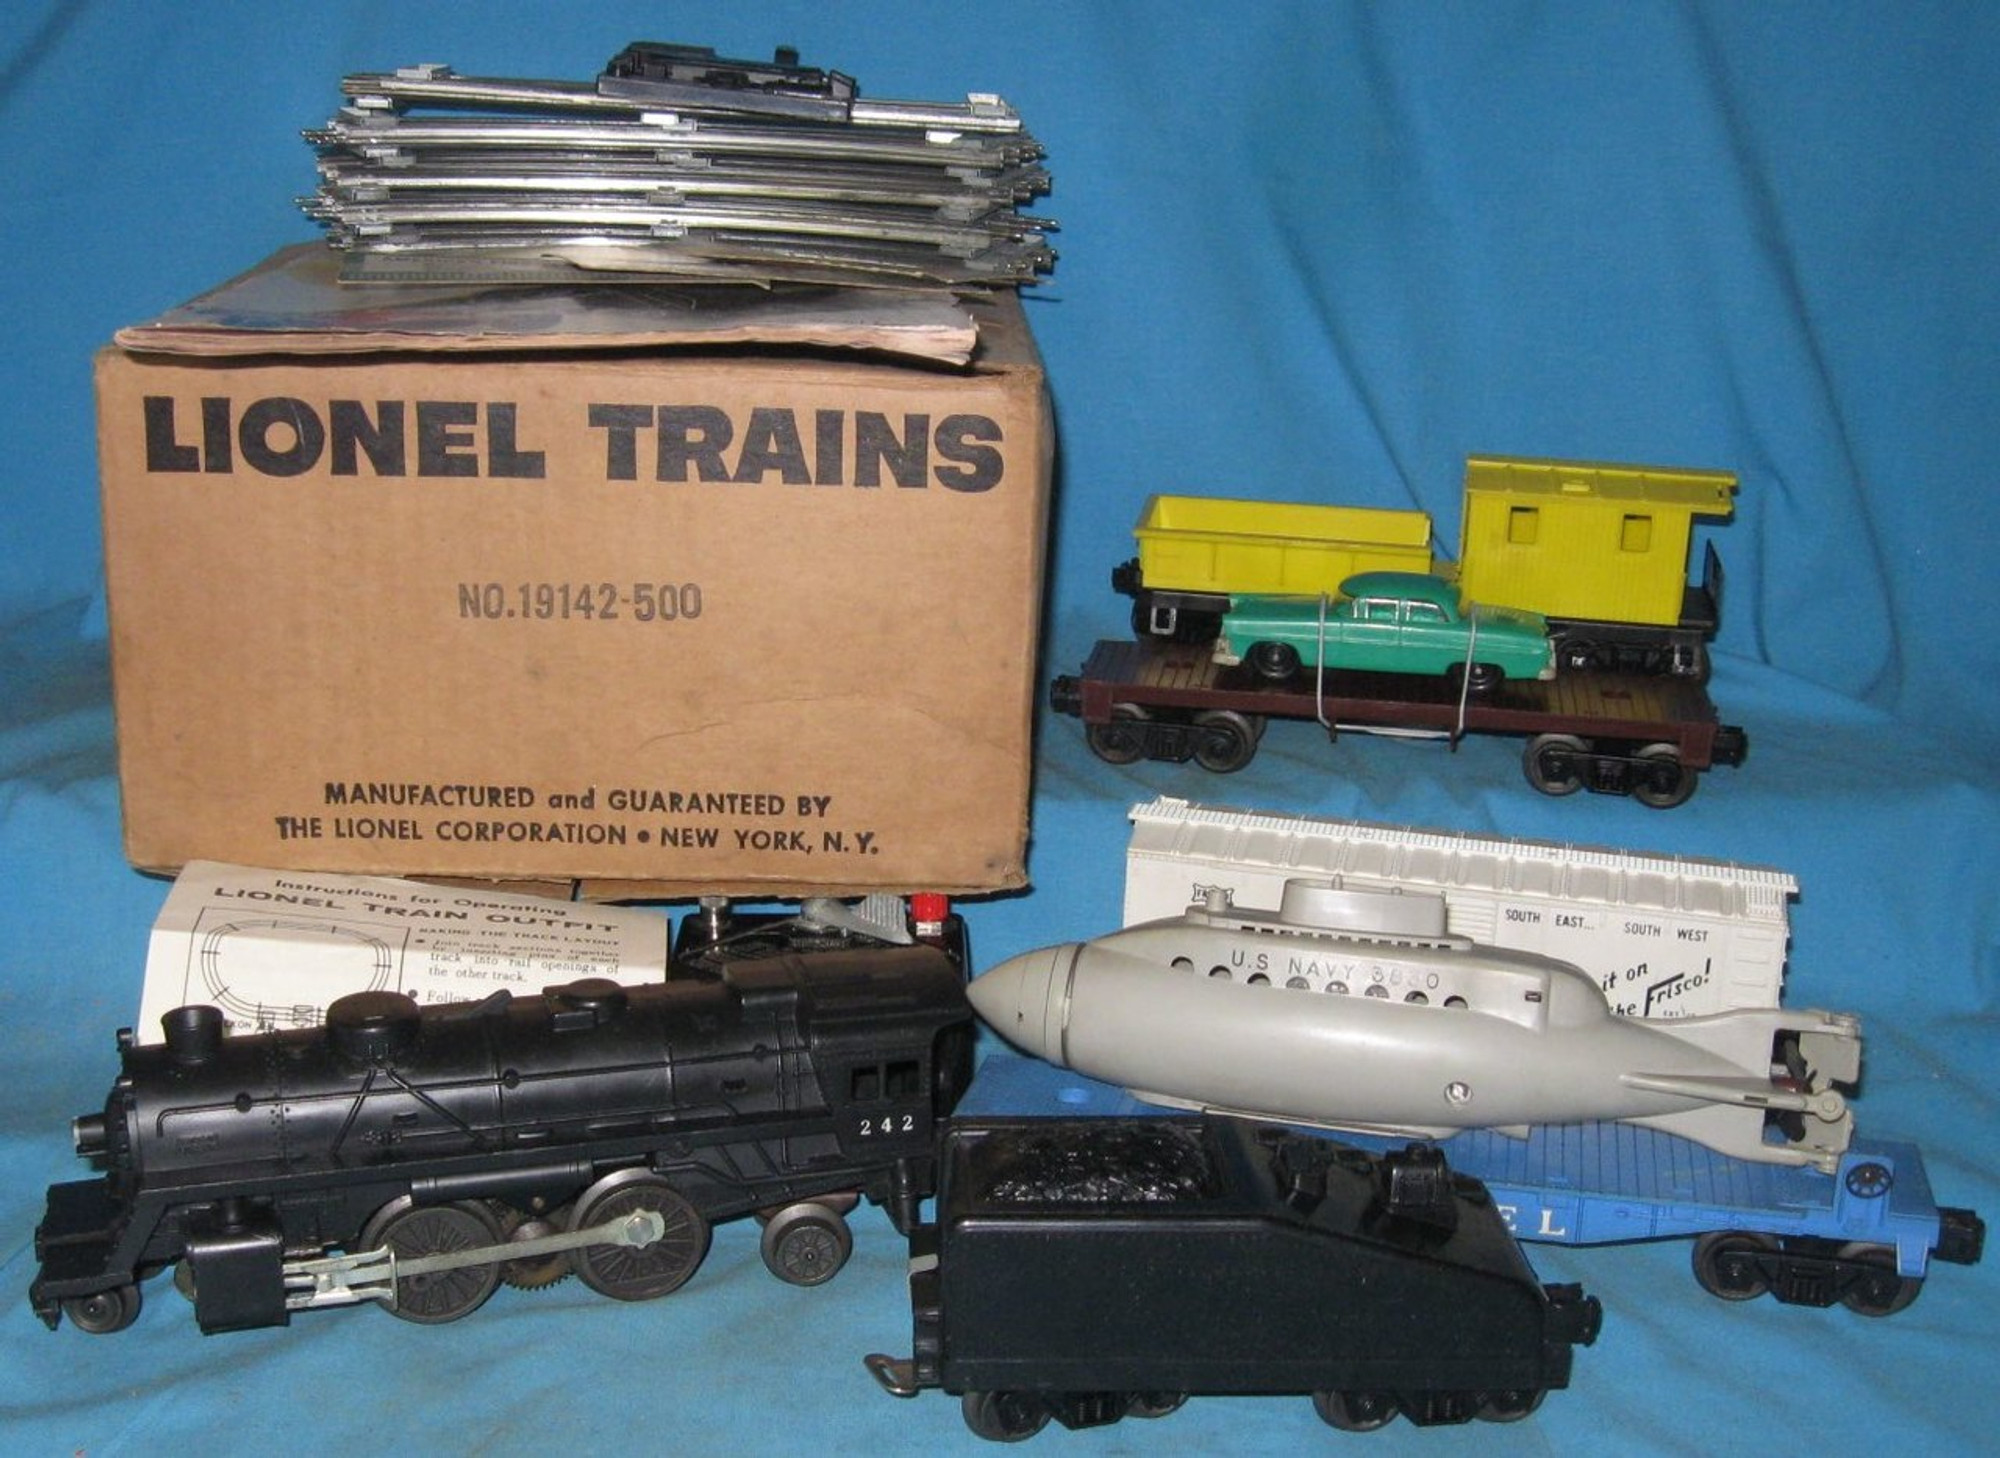 Freight Papercraft Train | tunersread.com